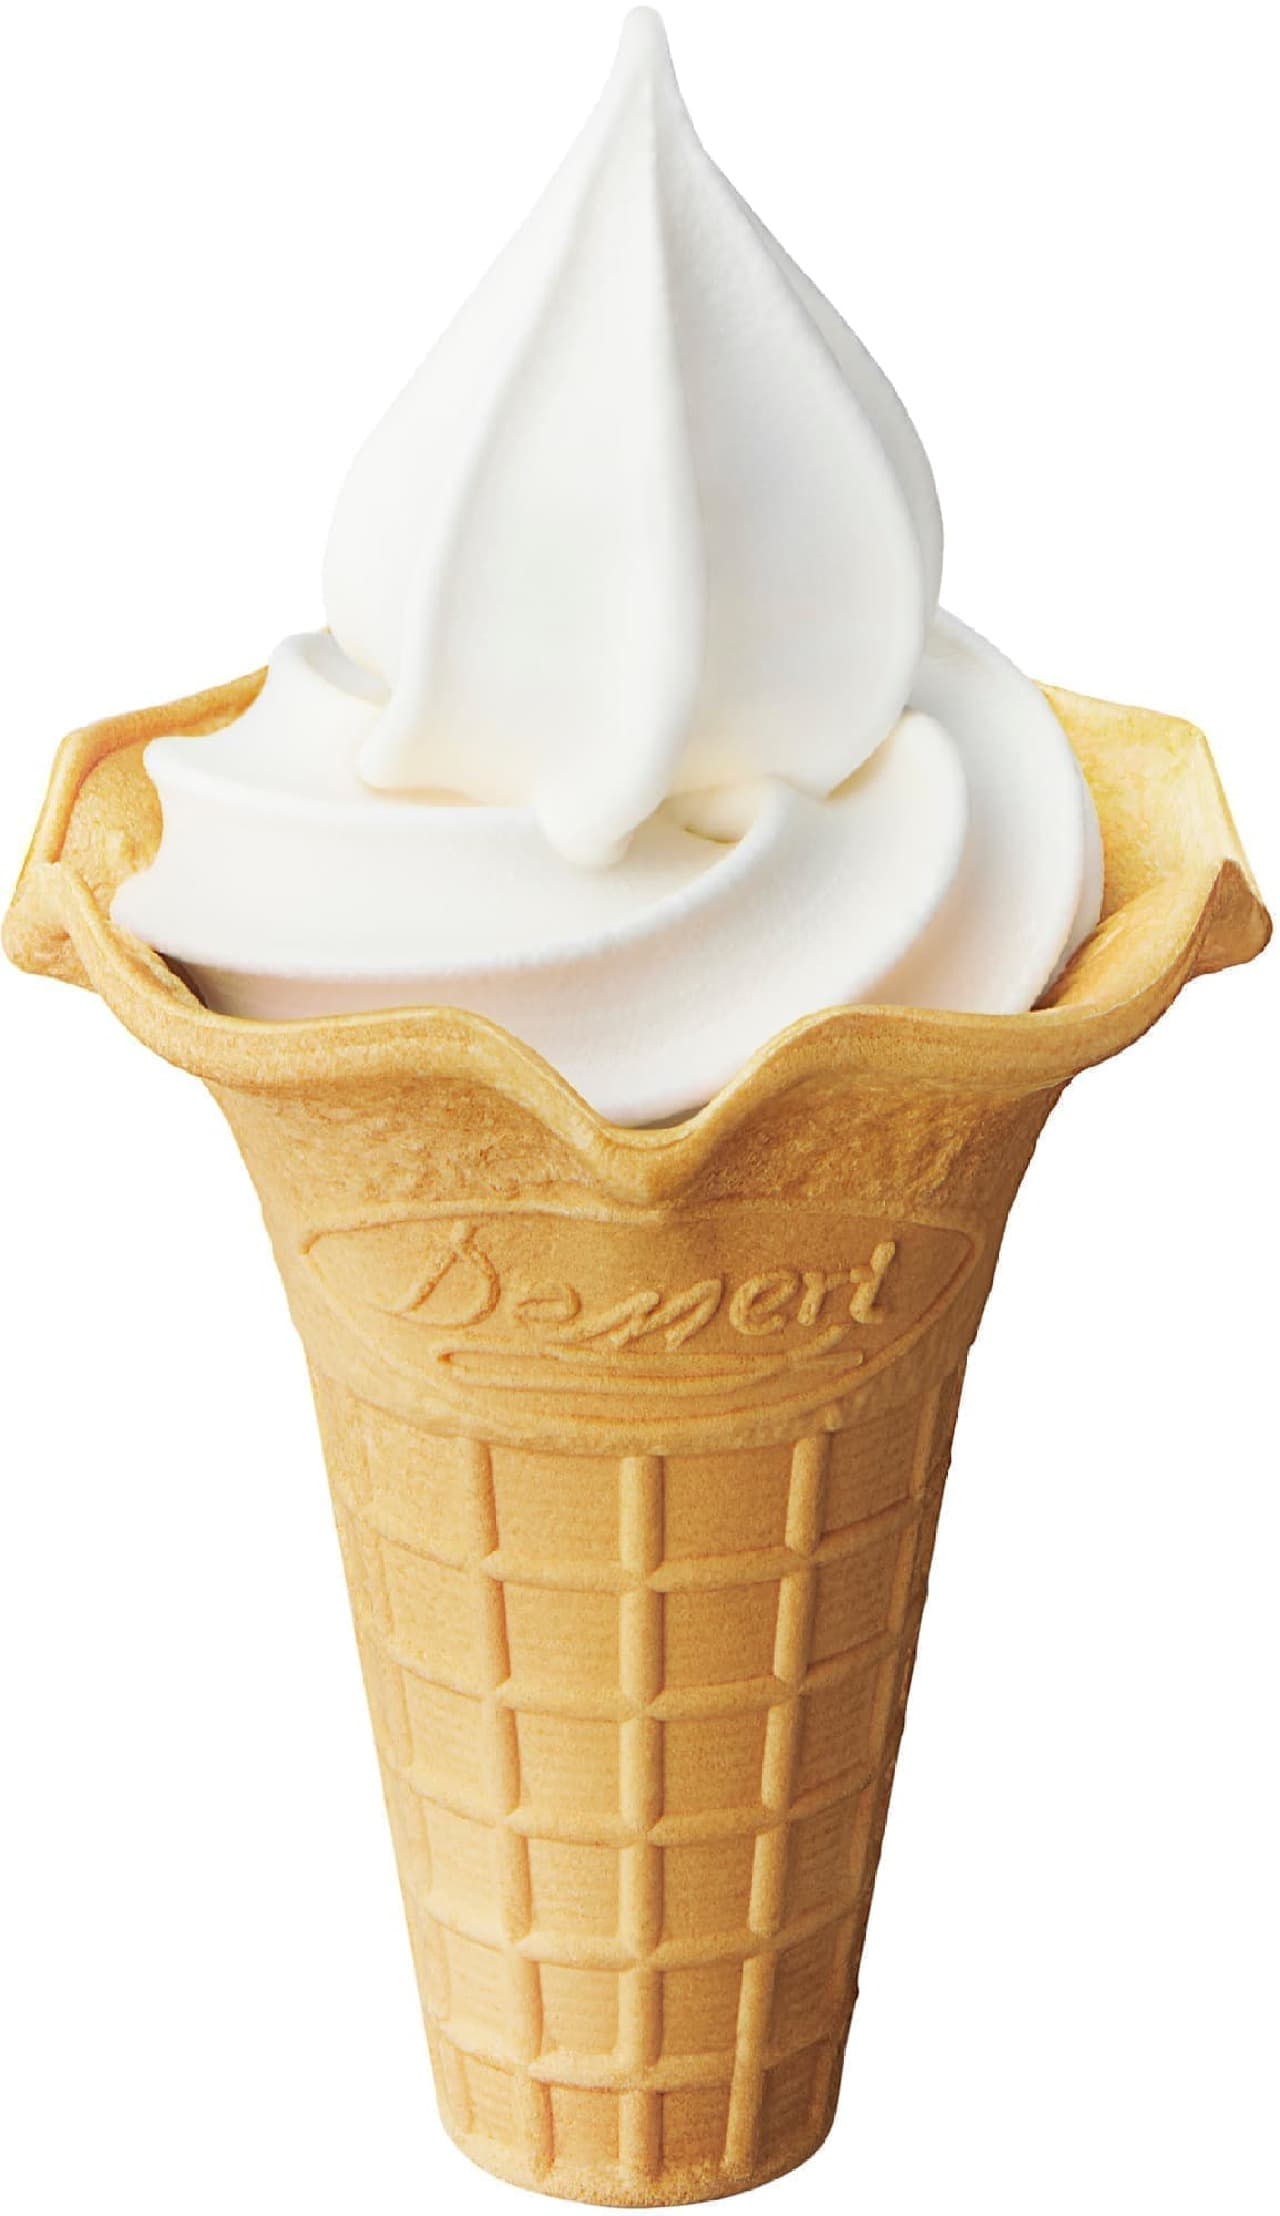 Ministop "Soft serve new vanilla"